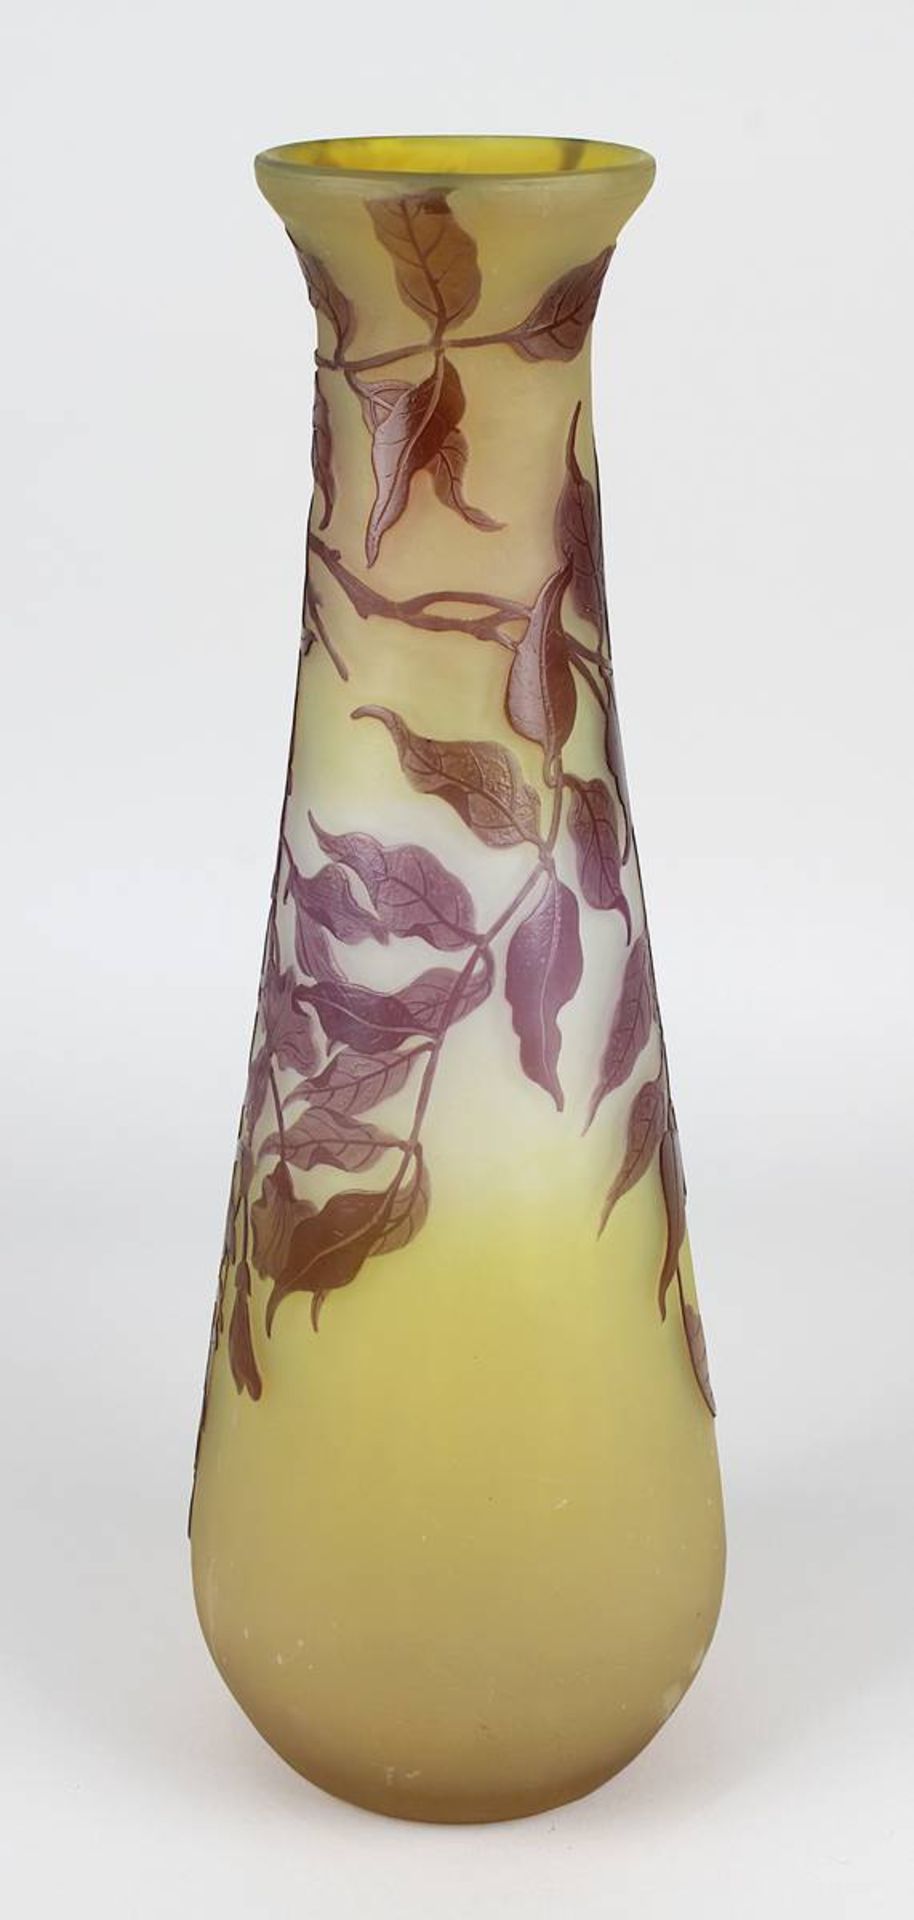 Gallé Jugendstil-Vase mit Glyziniendekor, Nancy 1904-1906, keulenförmiger Klarglaskorpus innen mit - Image 2 of 4